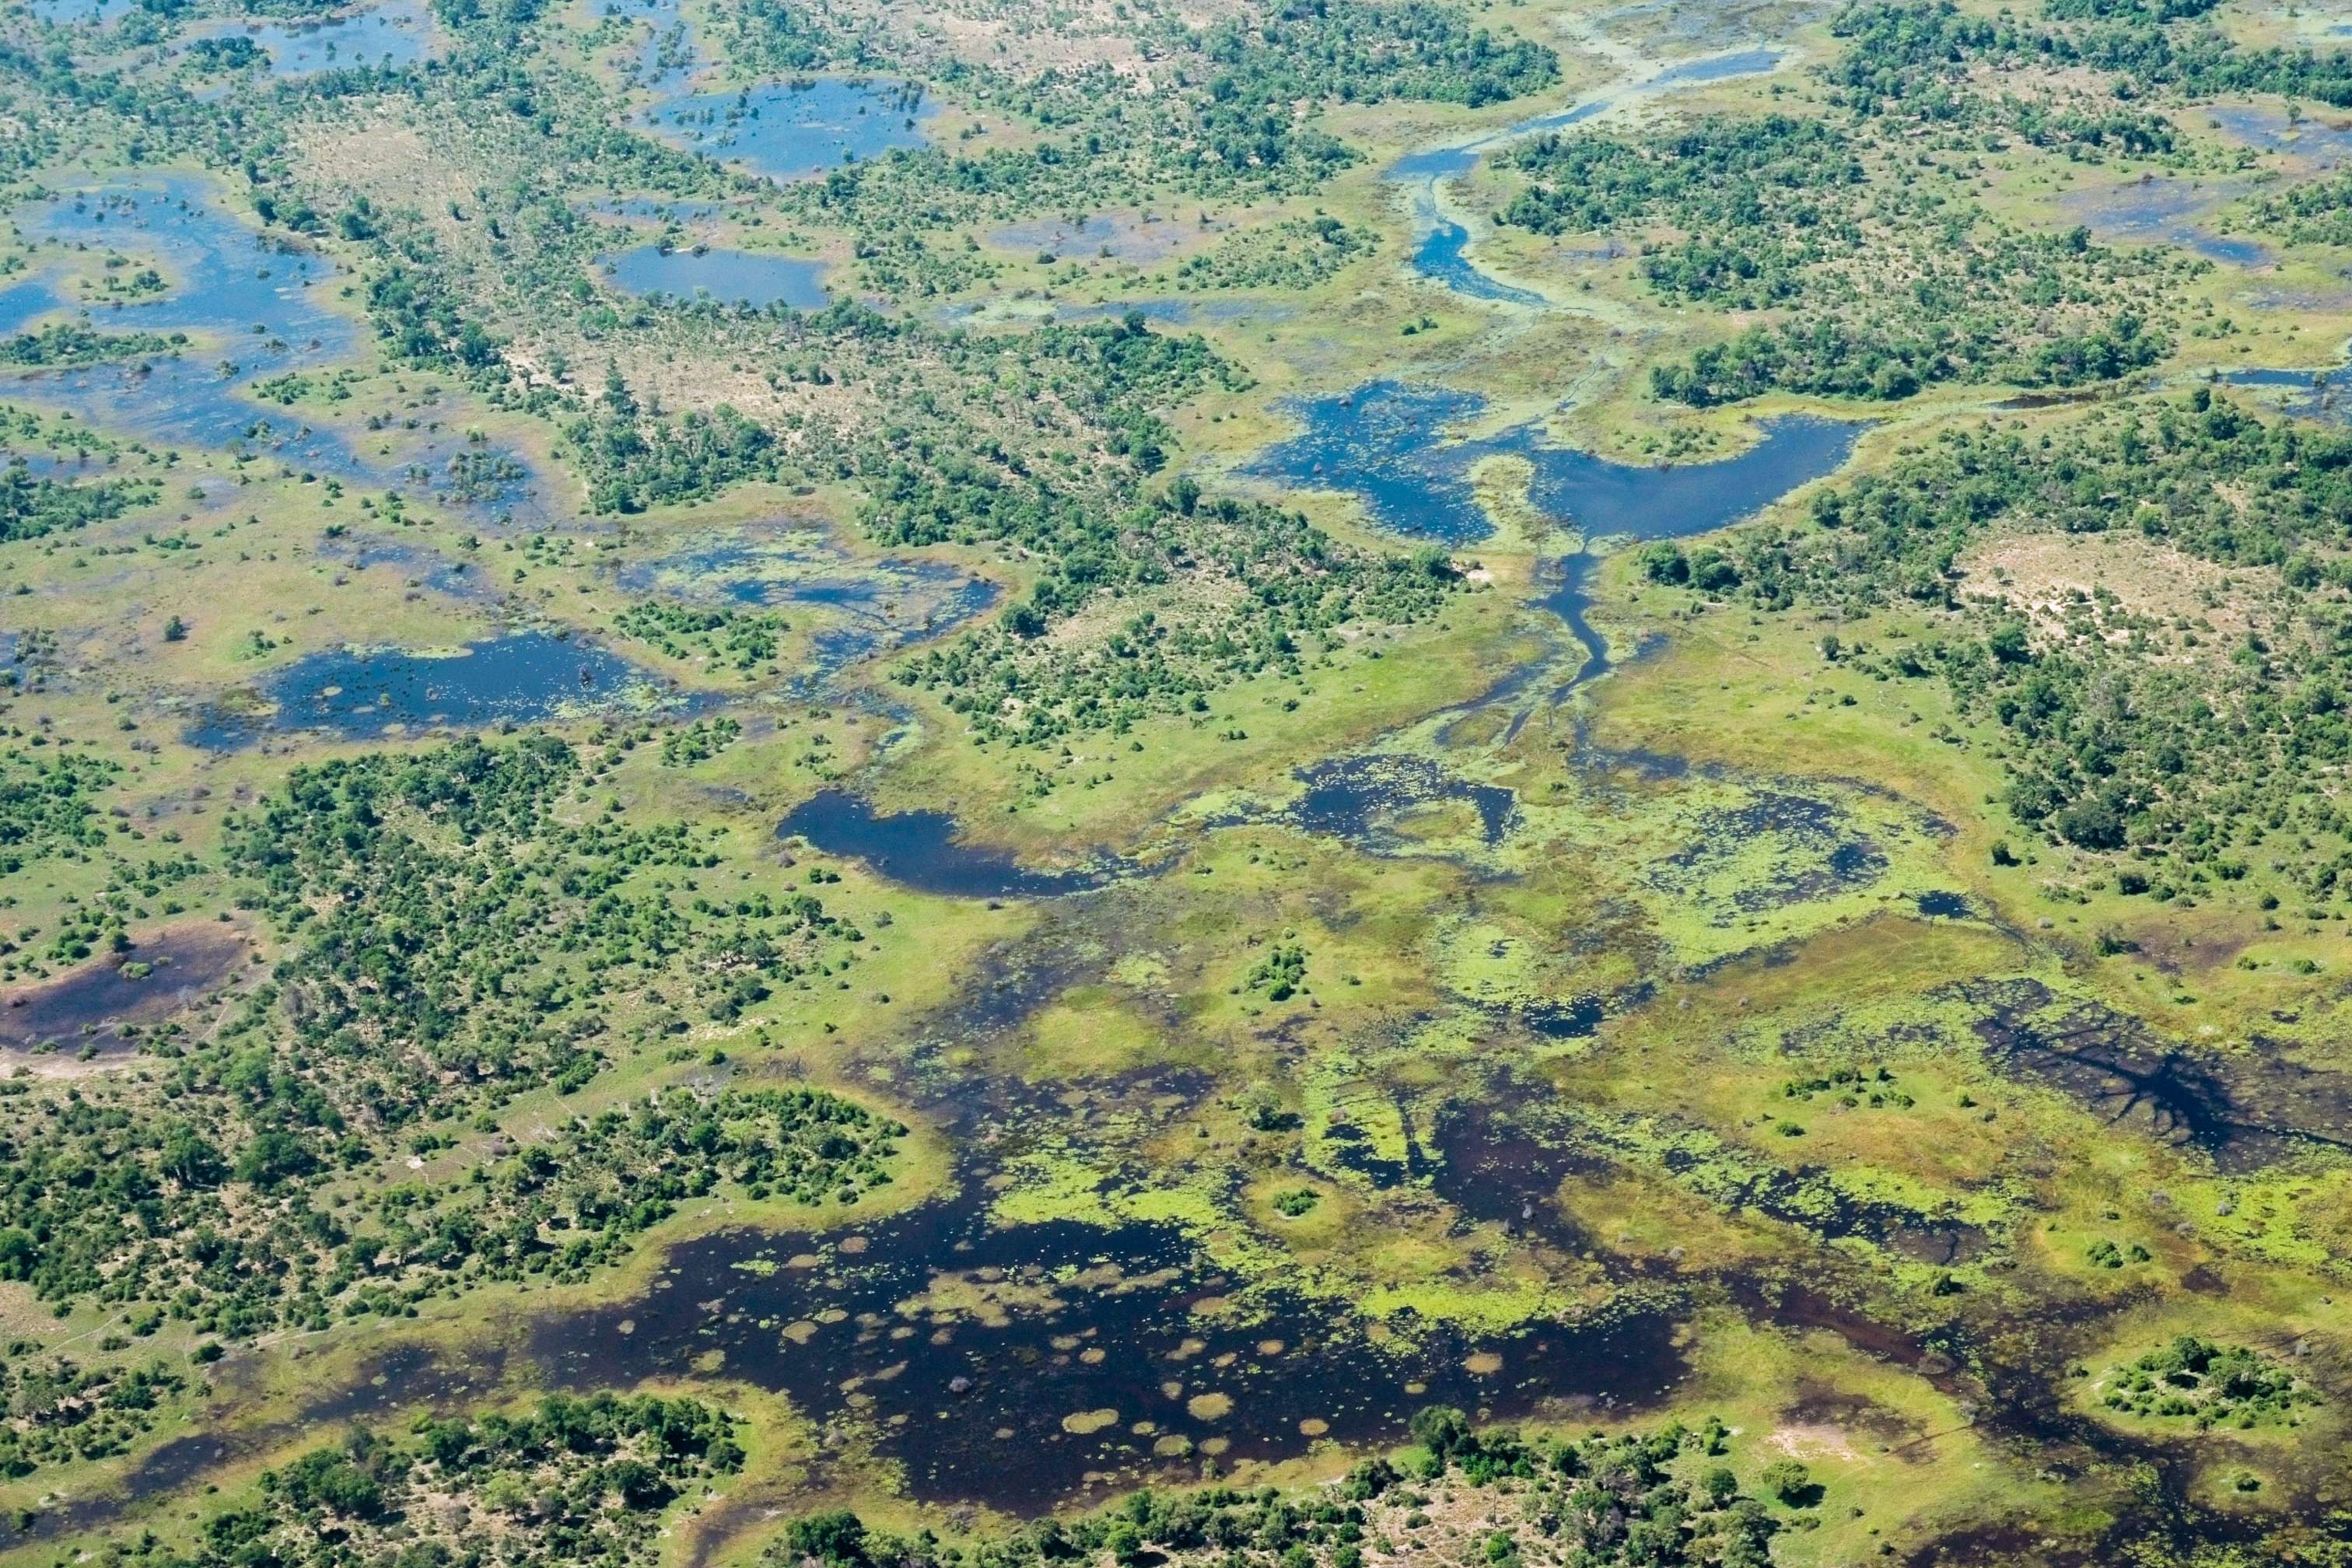 The inundated landscape of Botswana’s Okavango delta. © Rachel Kramer/WWF-US